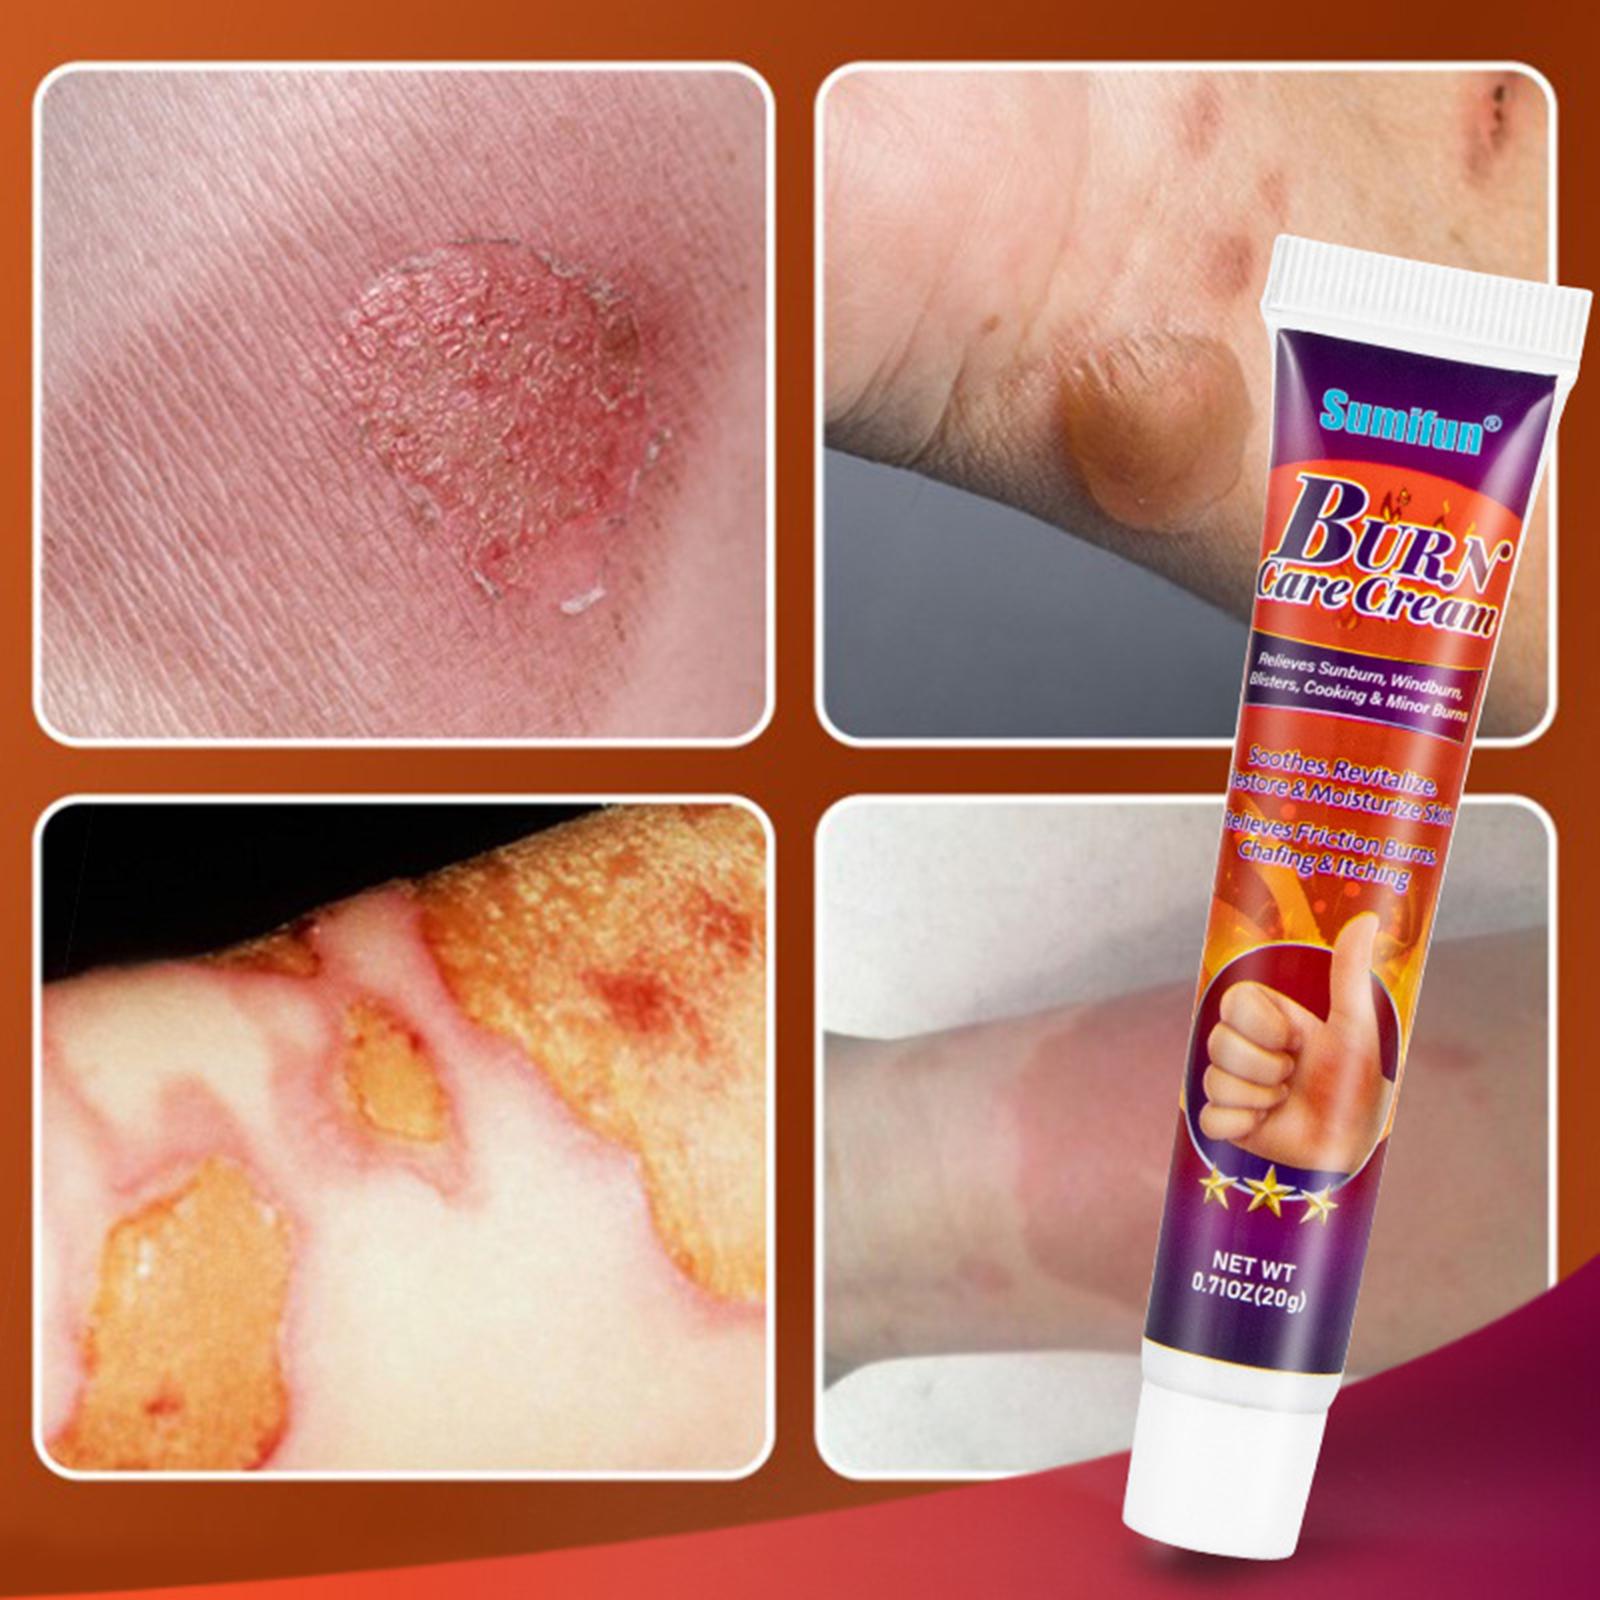 Sumifun 20g Skin Burn Care Cream Relieve Sunburn Windburn Blisters Cooking Burns Healing Care Moisturize Skin